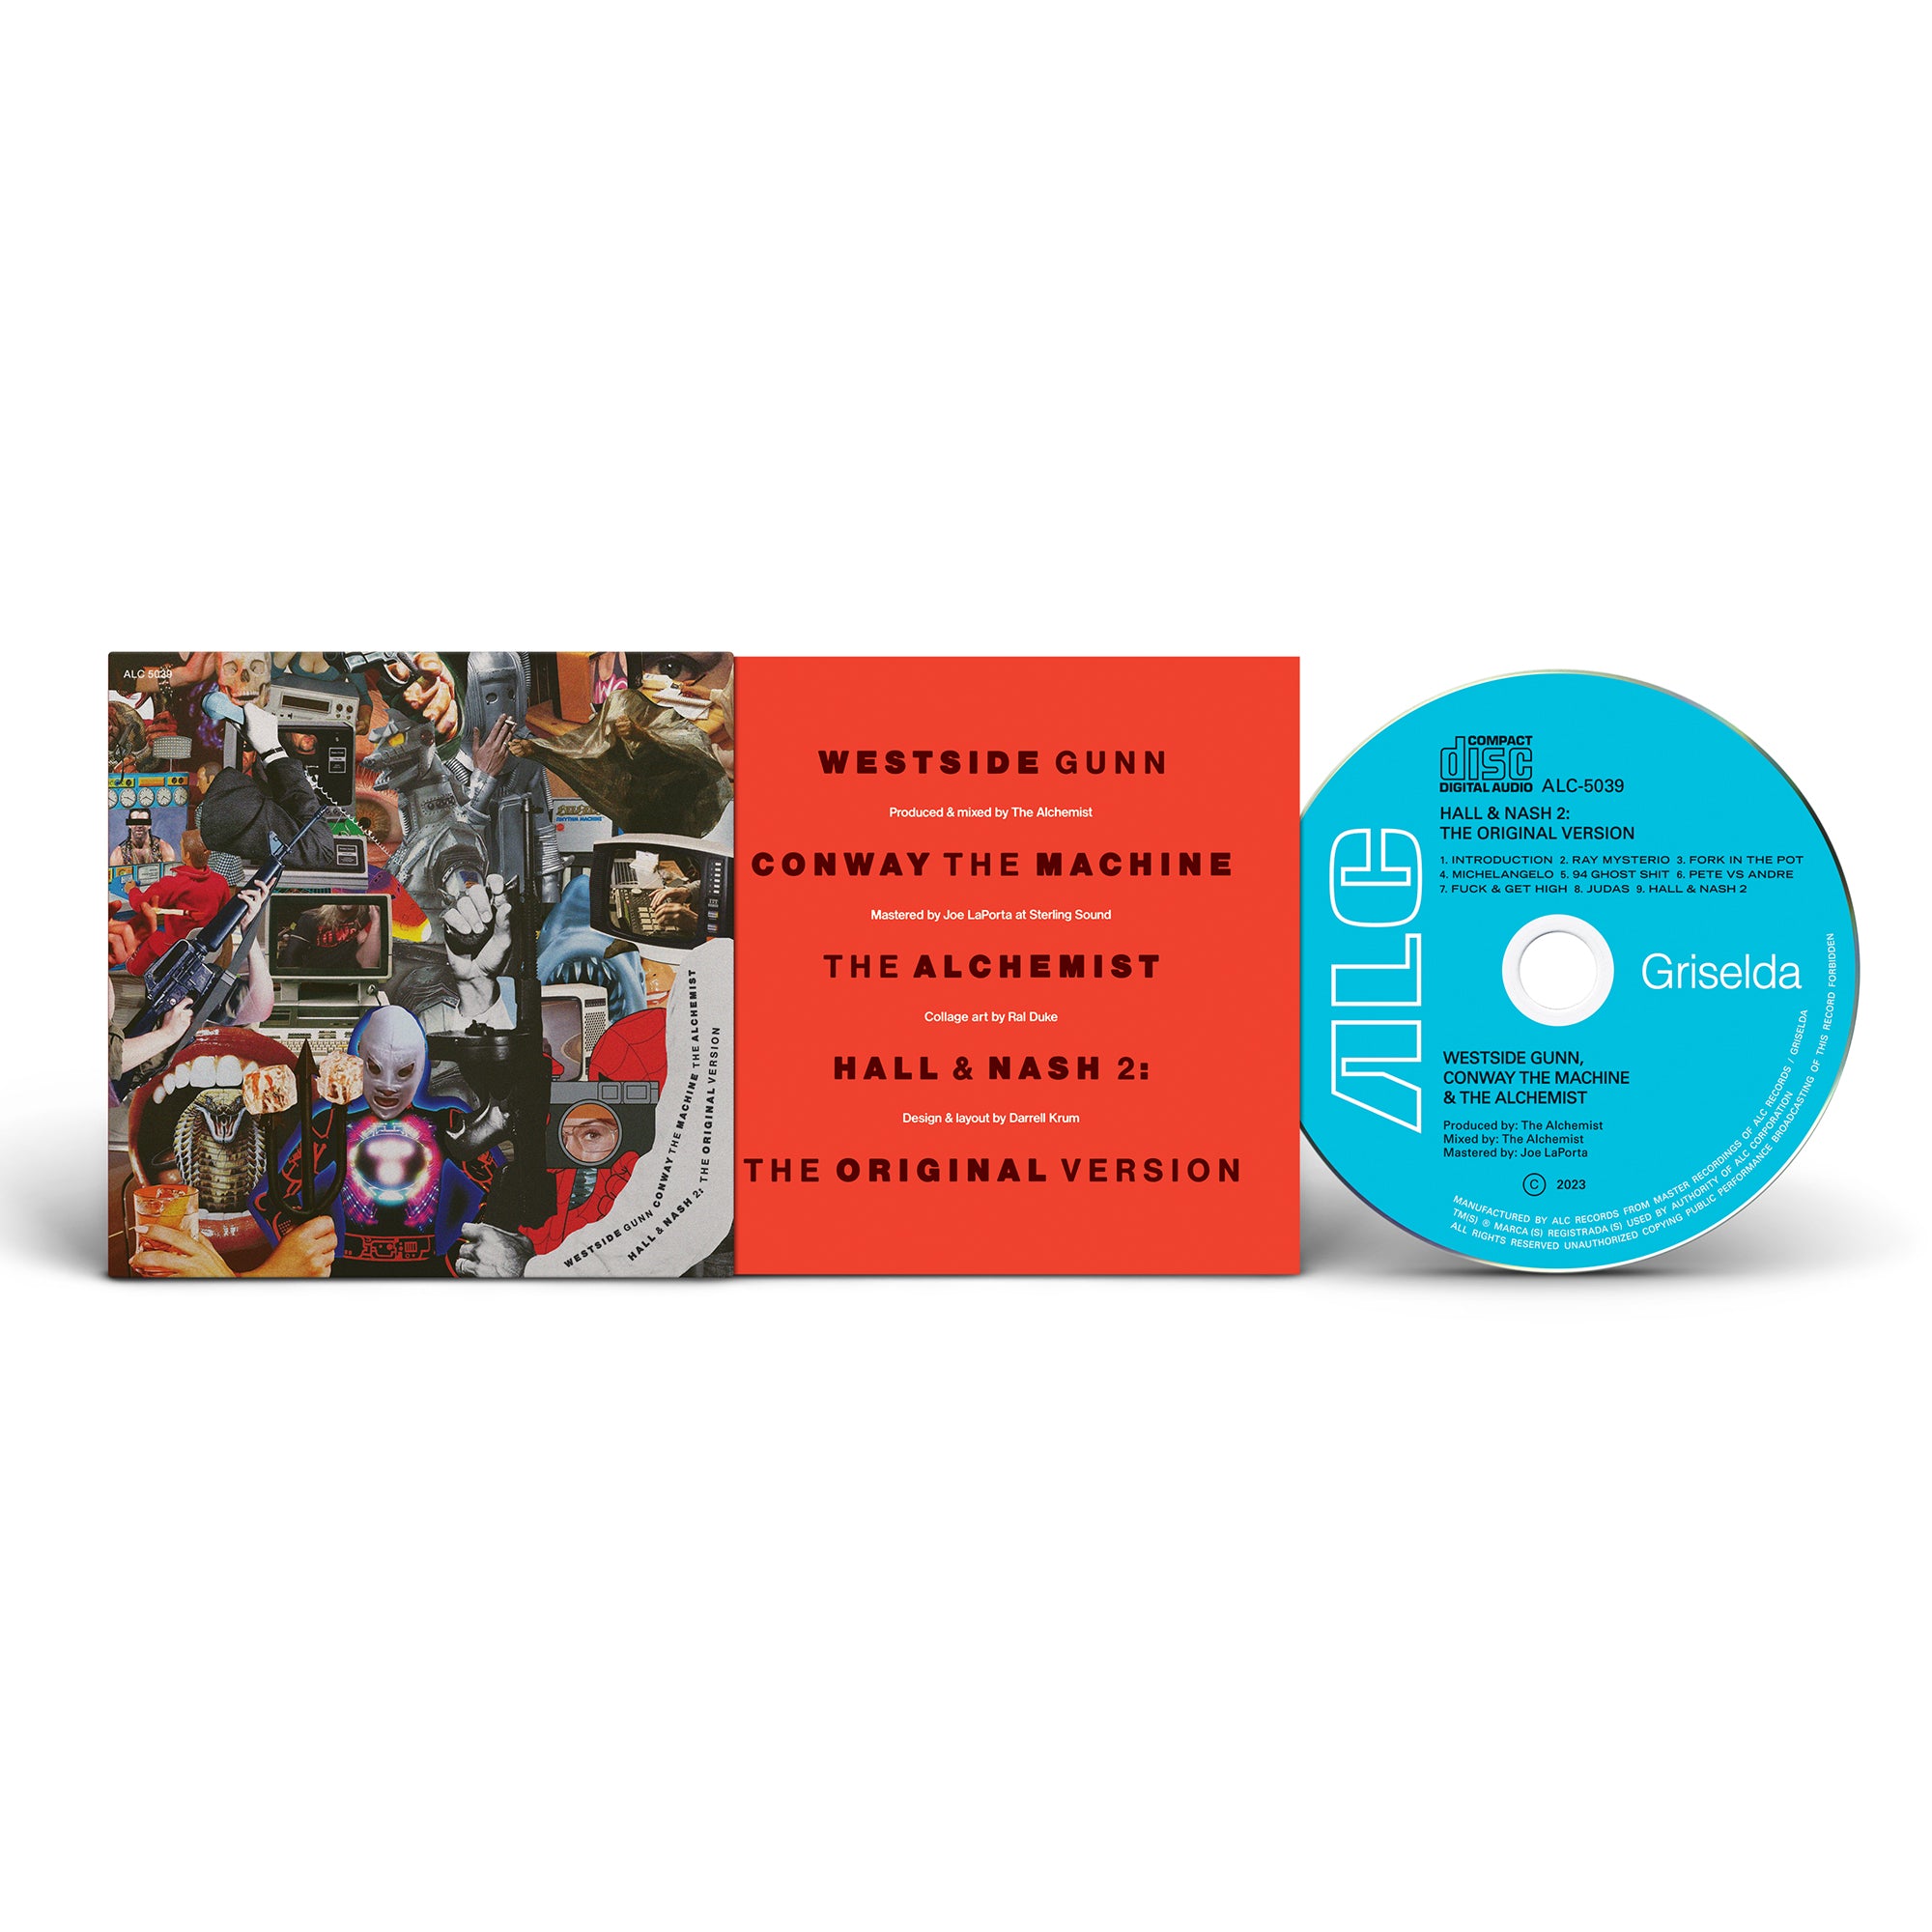 Hall & Nash 2: The Original Version (CD - Alternate Cover)